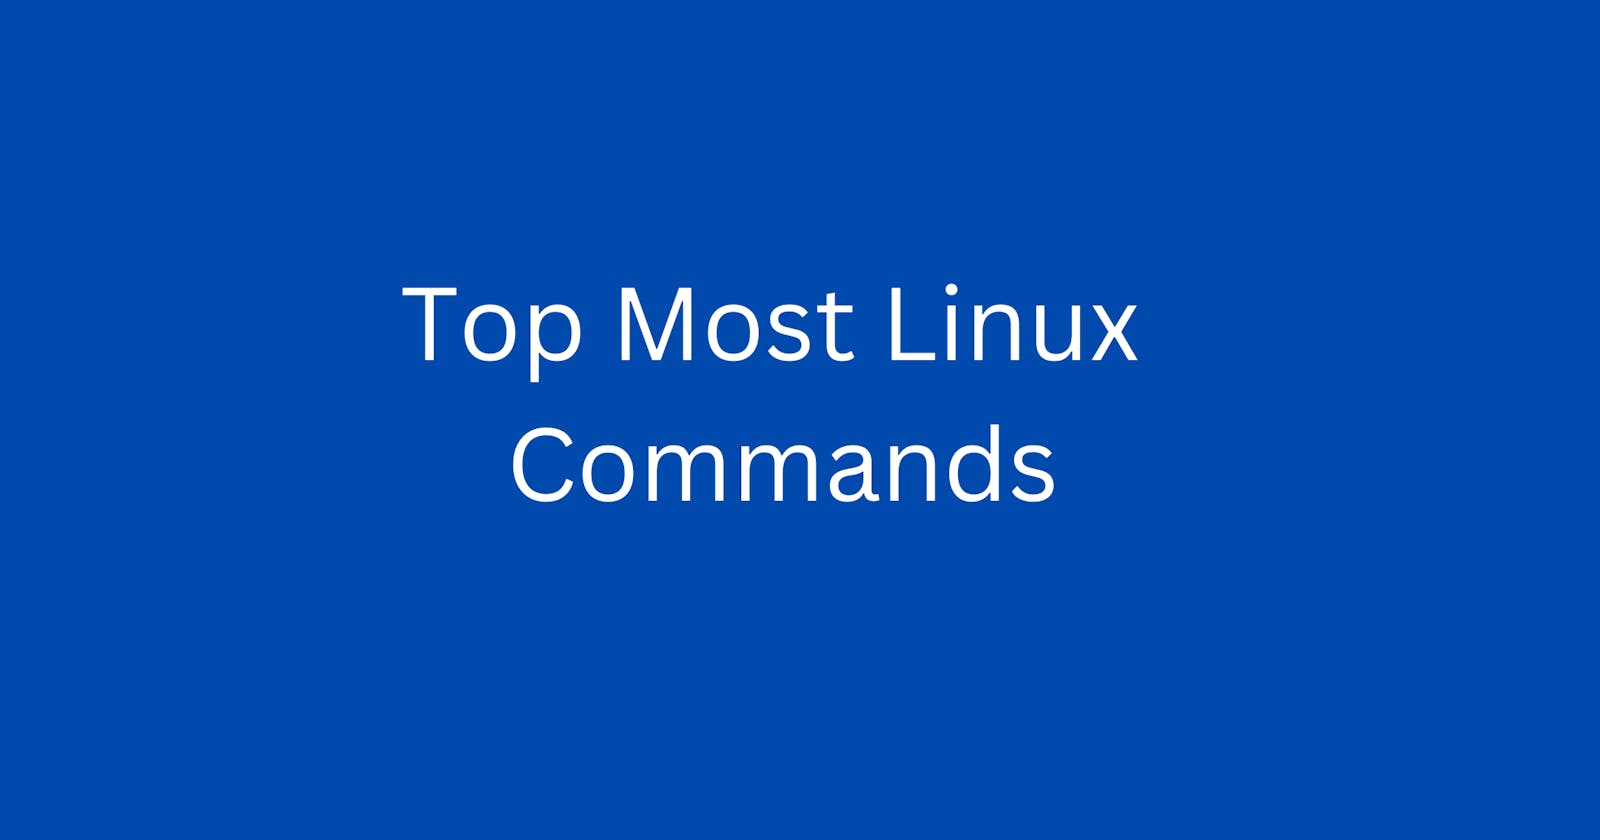 Top Most Linux Commands